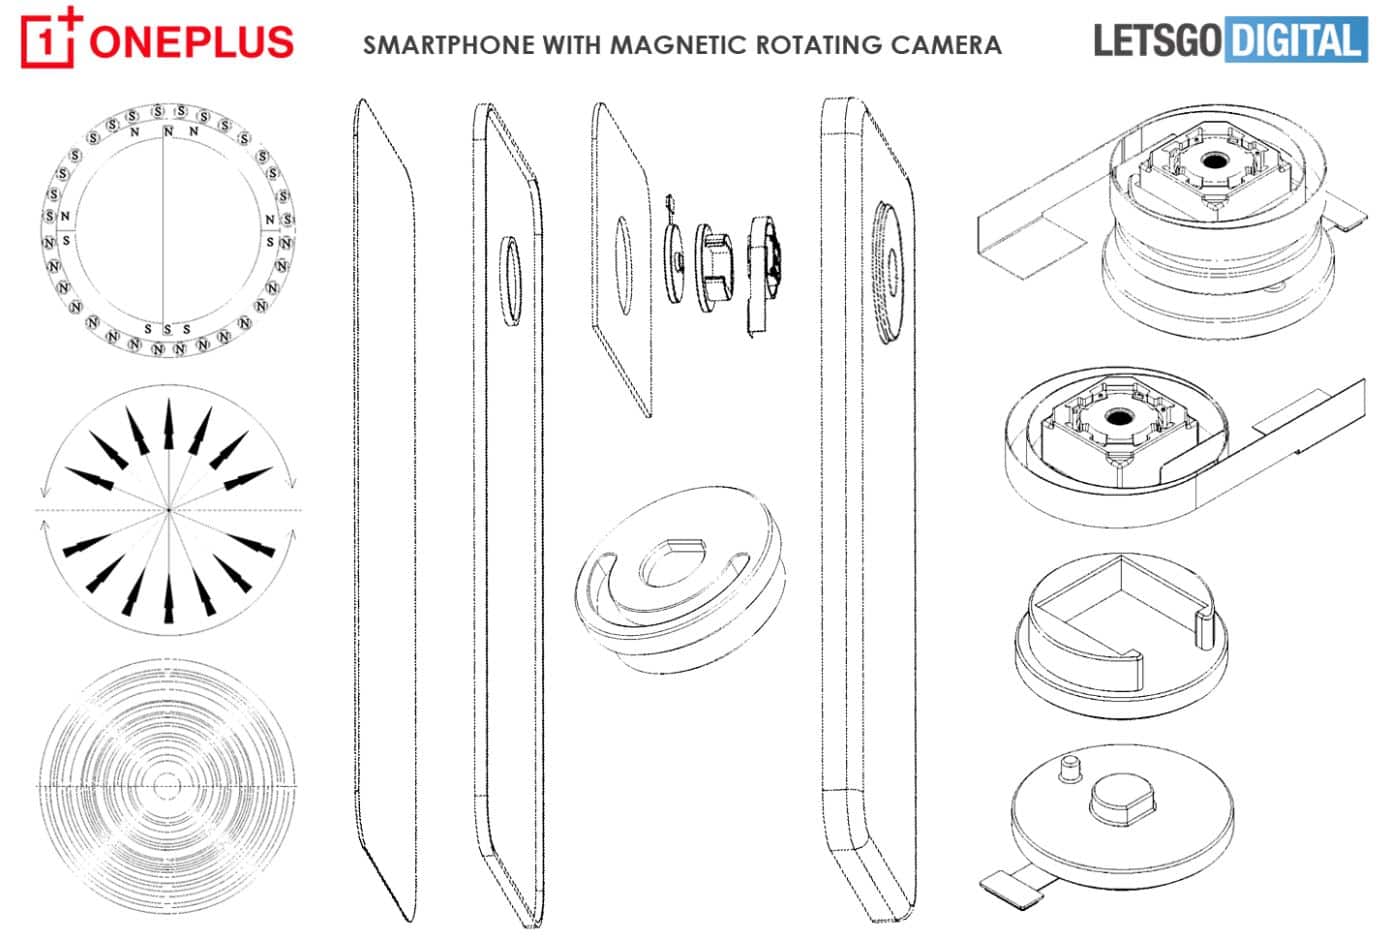 OnePlus-Smartphone-180-degree-rotating-camera